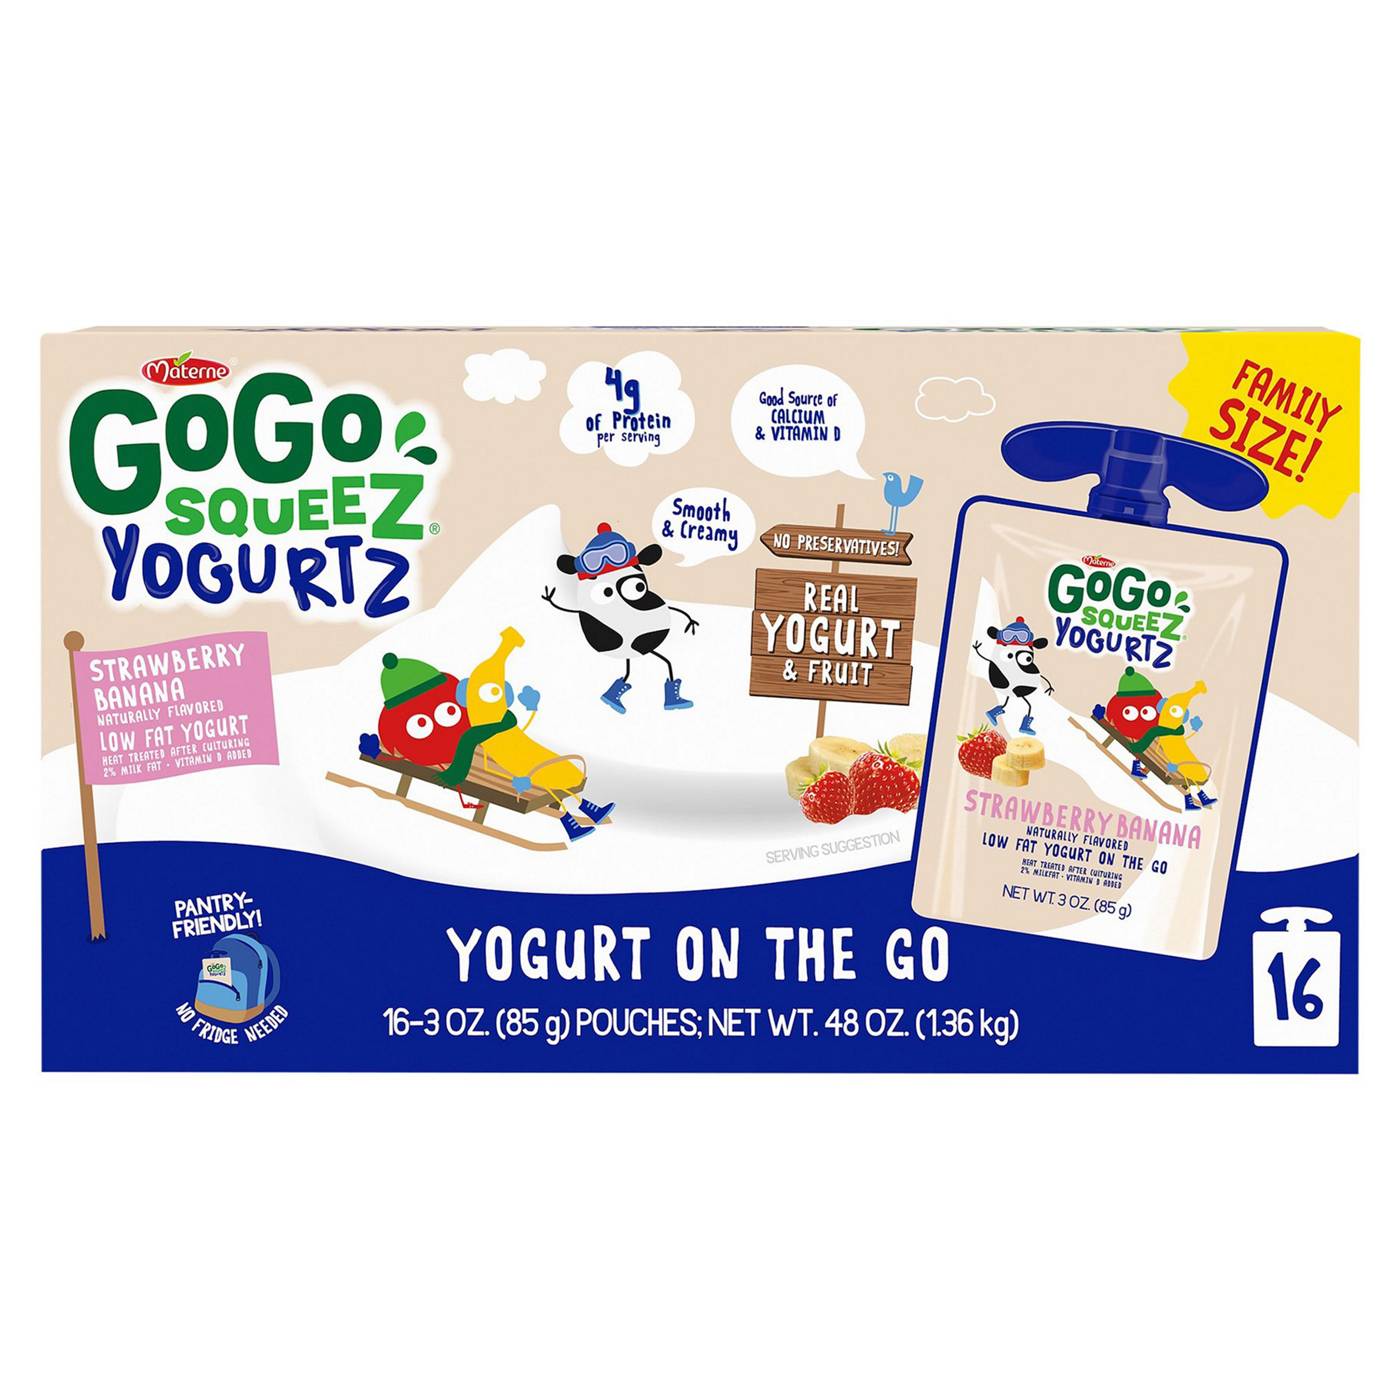 GoGo squeeZ Yogurtz Strawberry Banana Yogurt on the Go; image 1 of 3